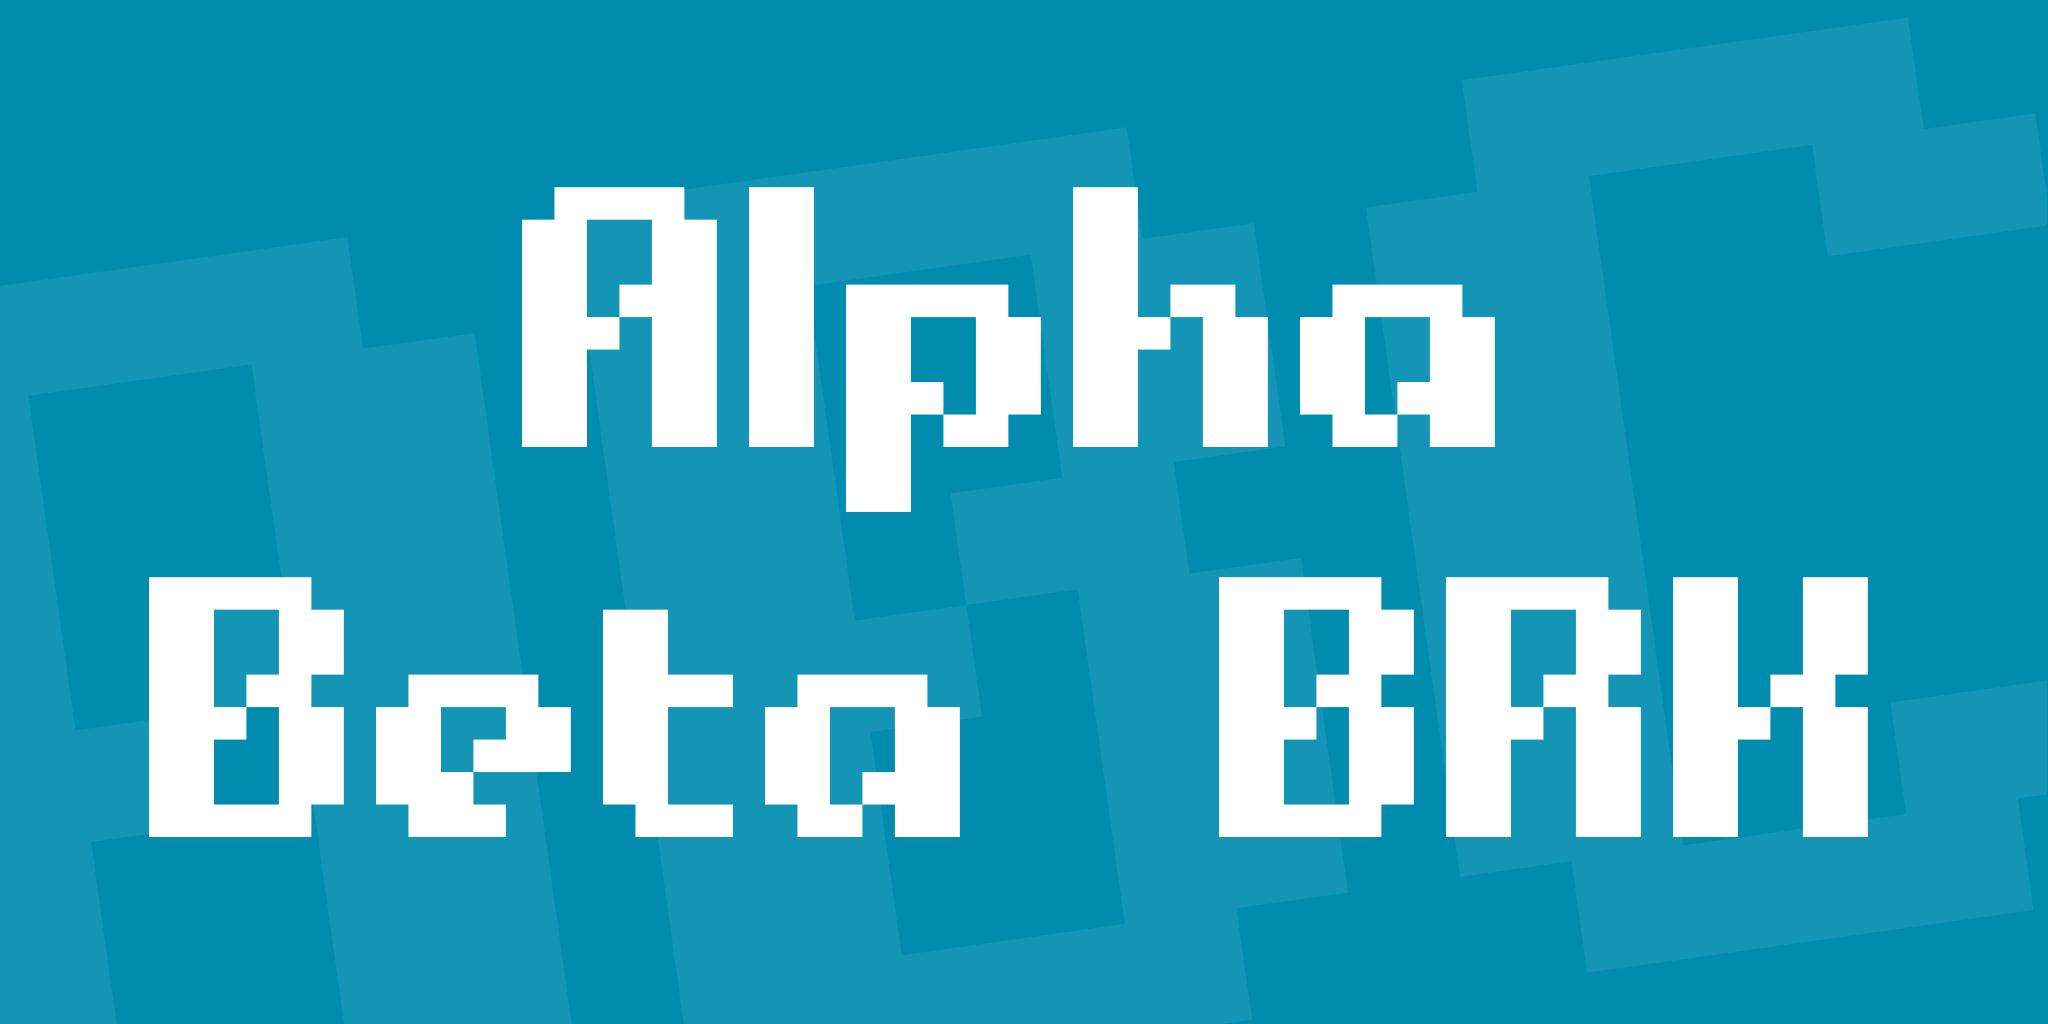 Alpha Beta Brk